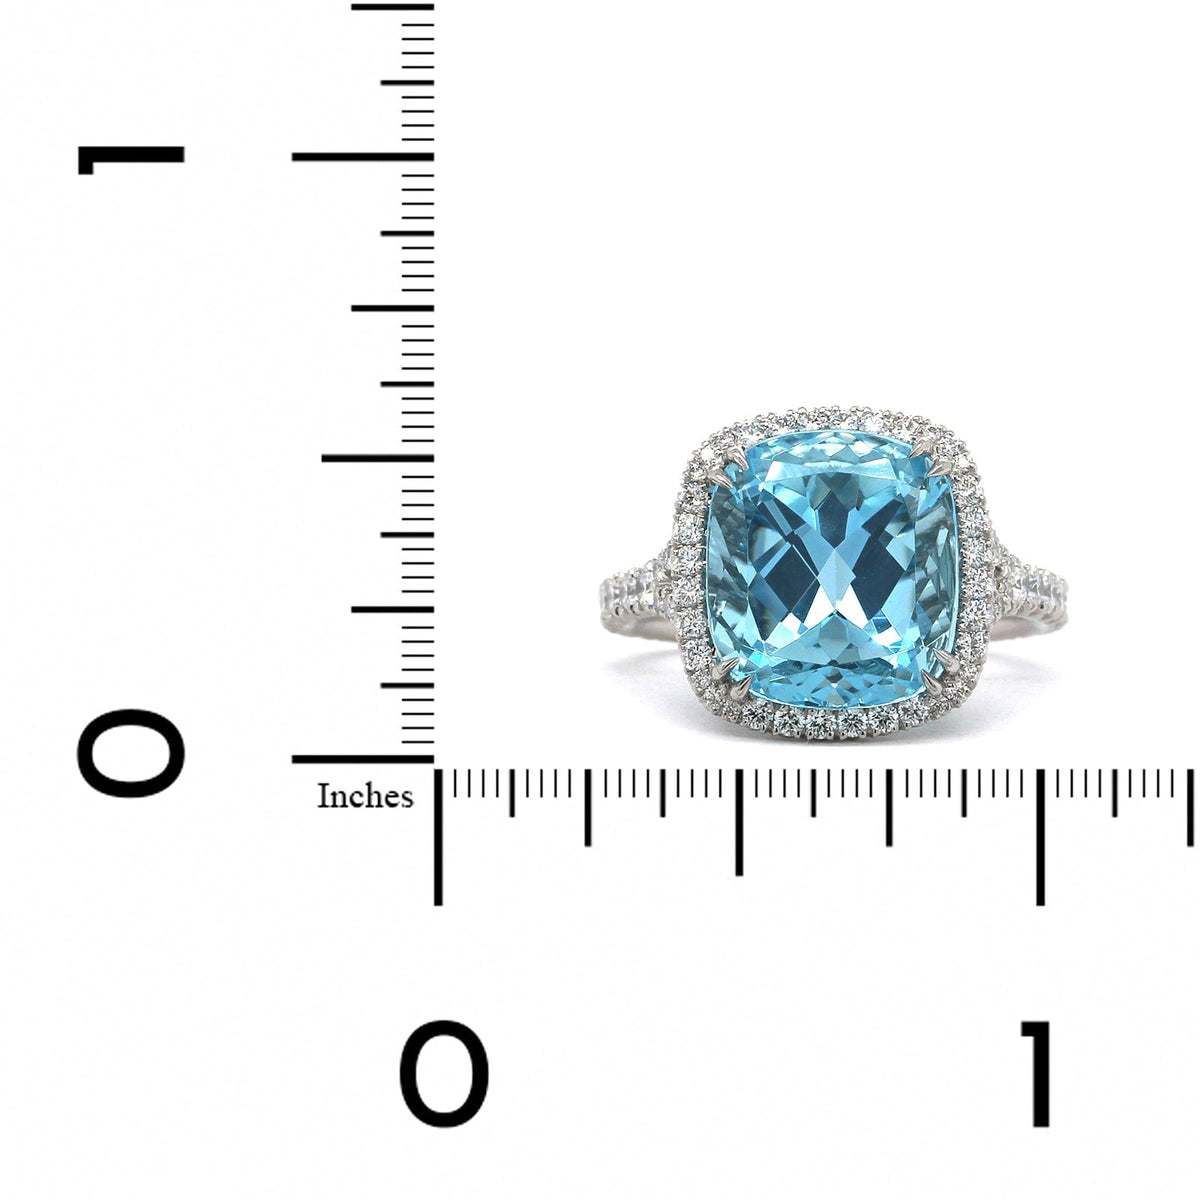 Platinum Cushion Aquamarine Diamond Halo Ring